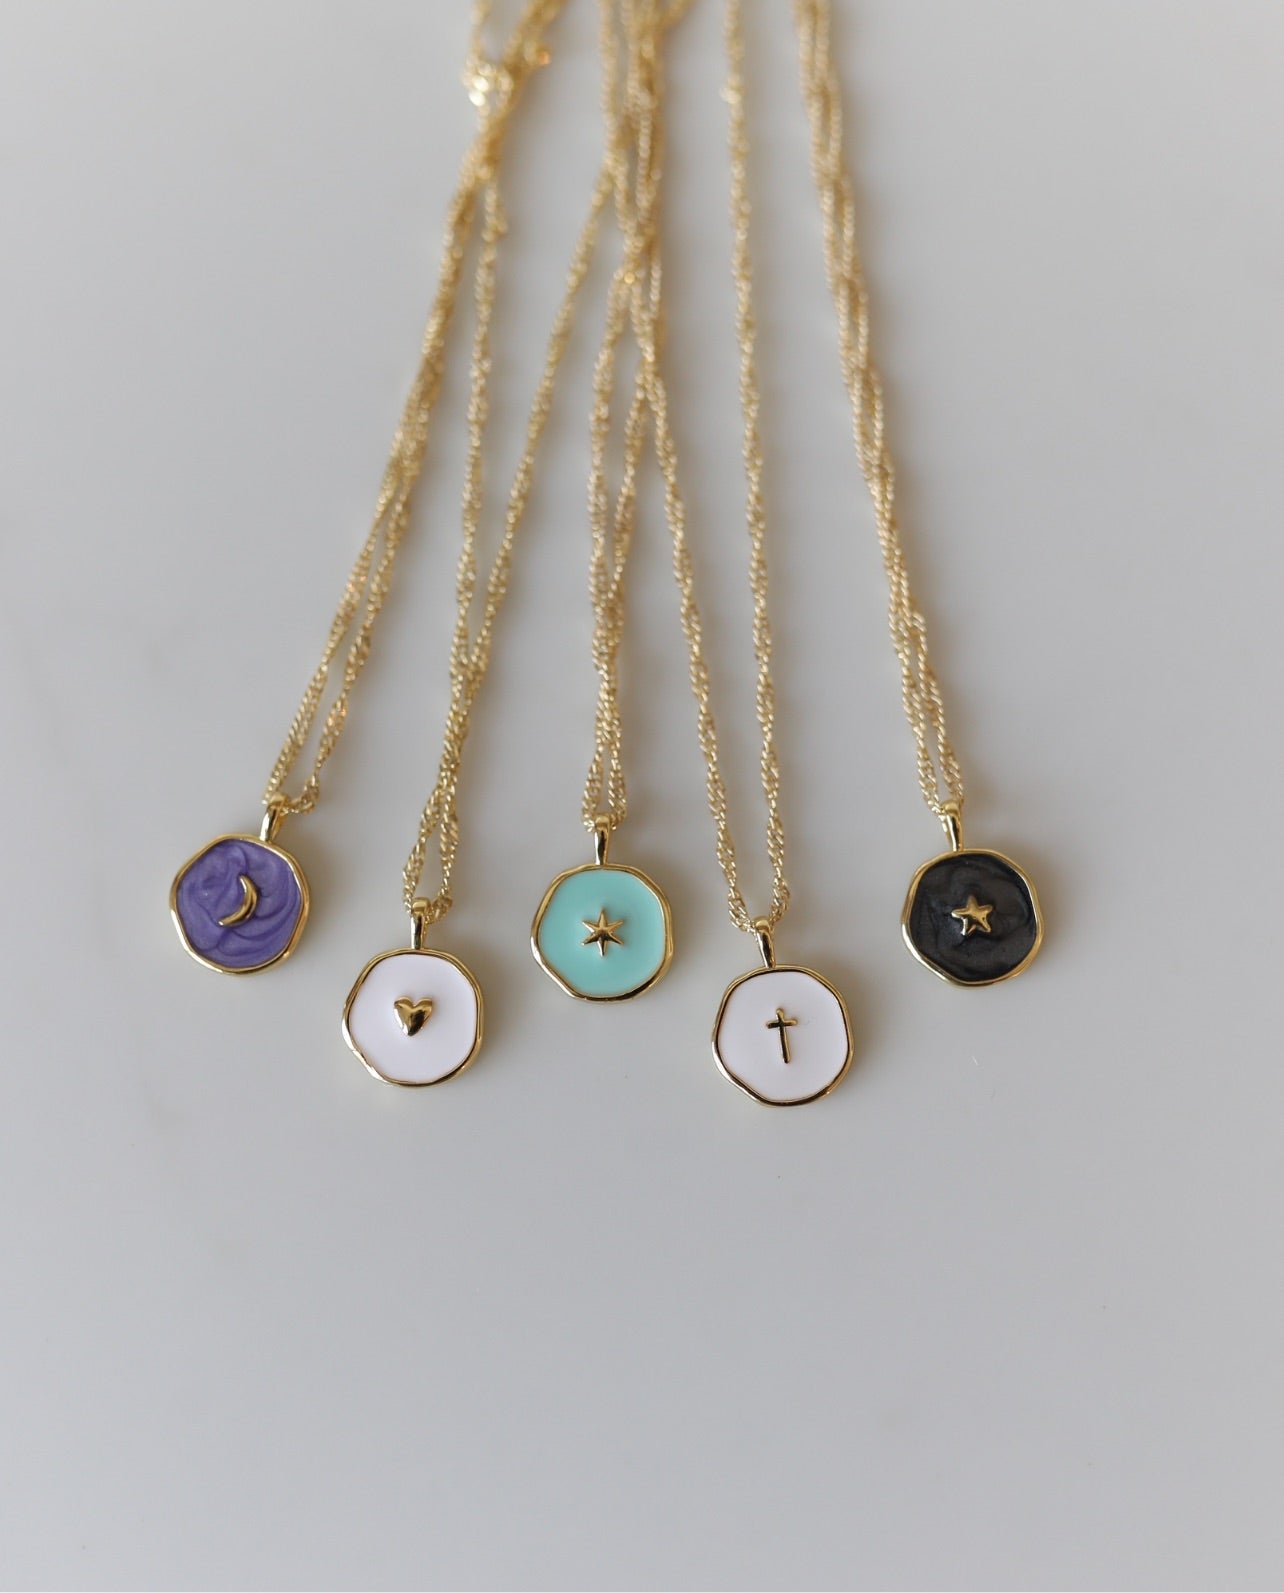 Mini Wax Seal Necklace - Enamel Pendant